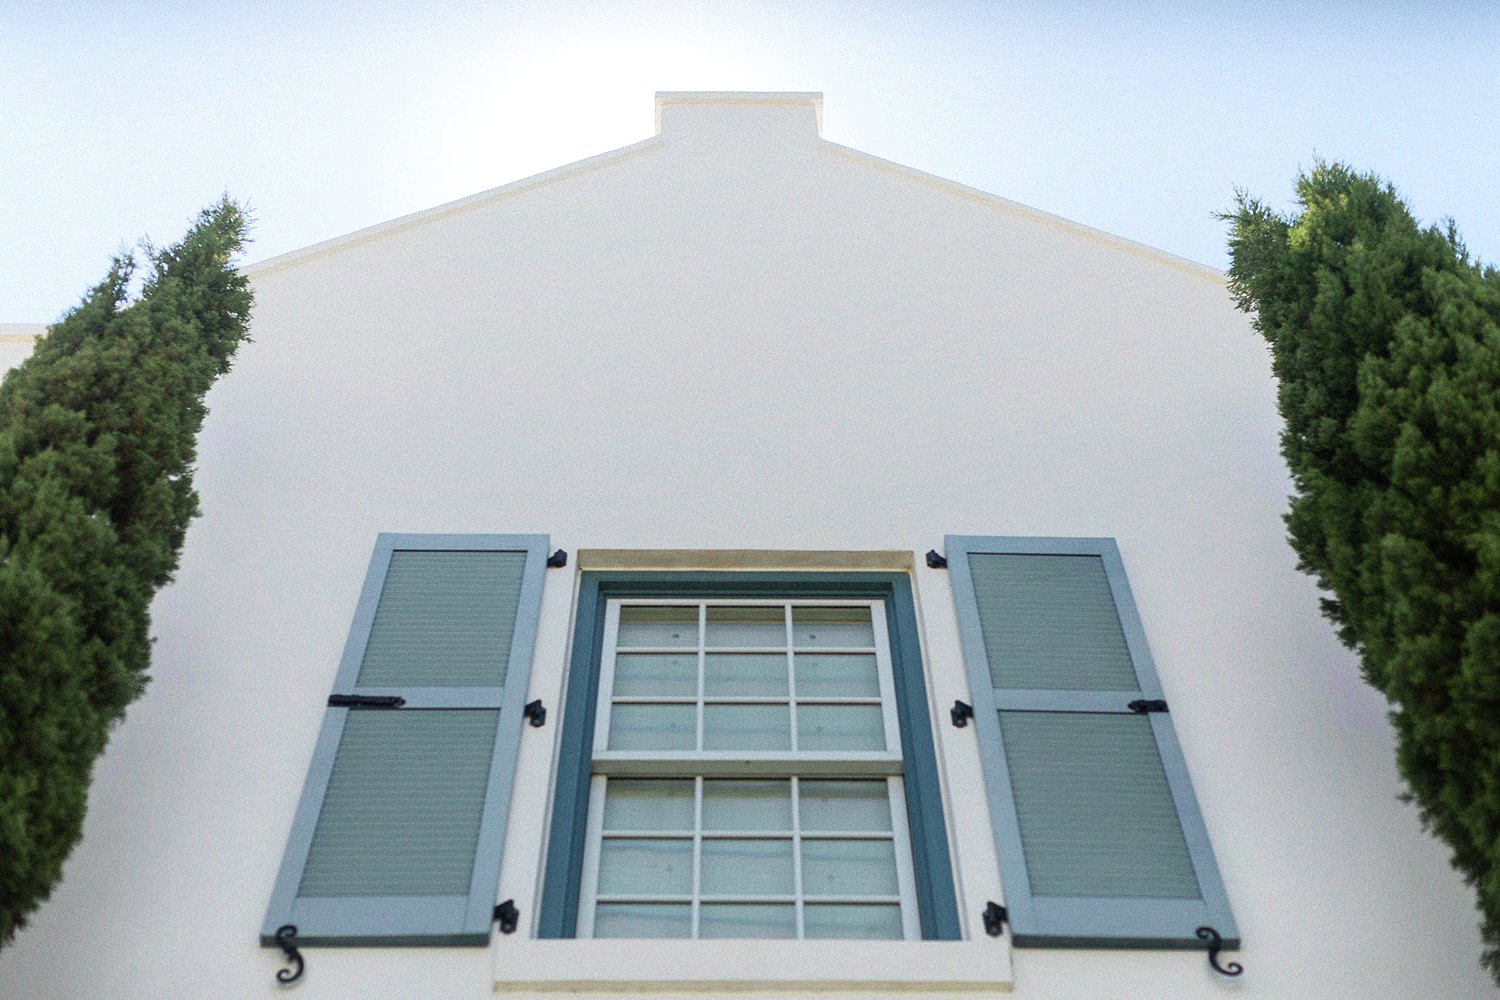 Alys Beach Florida green window shutters on white facade